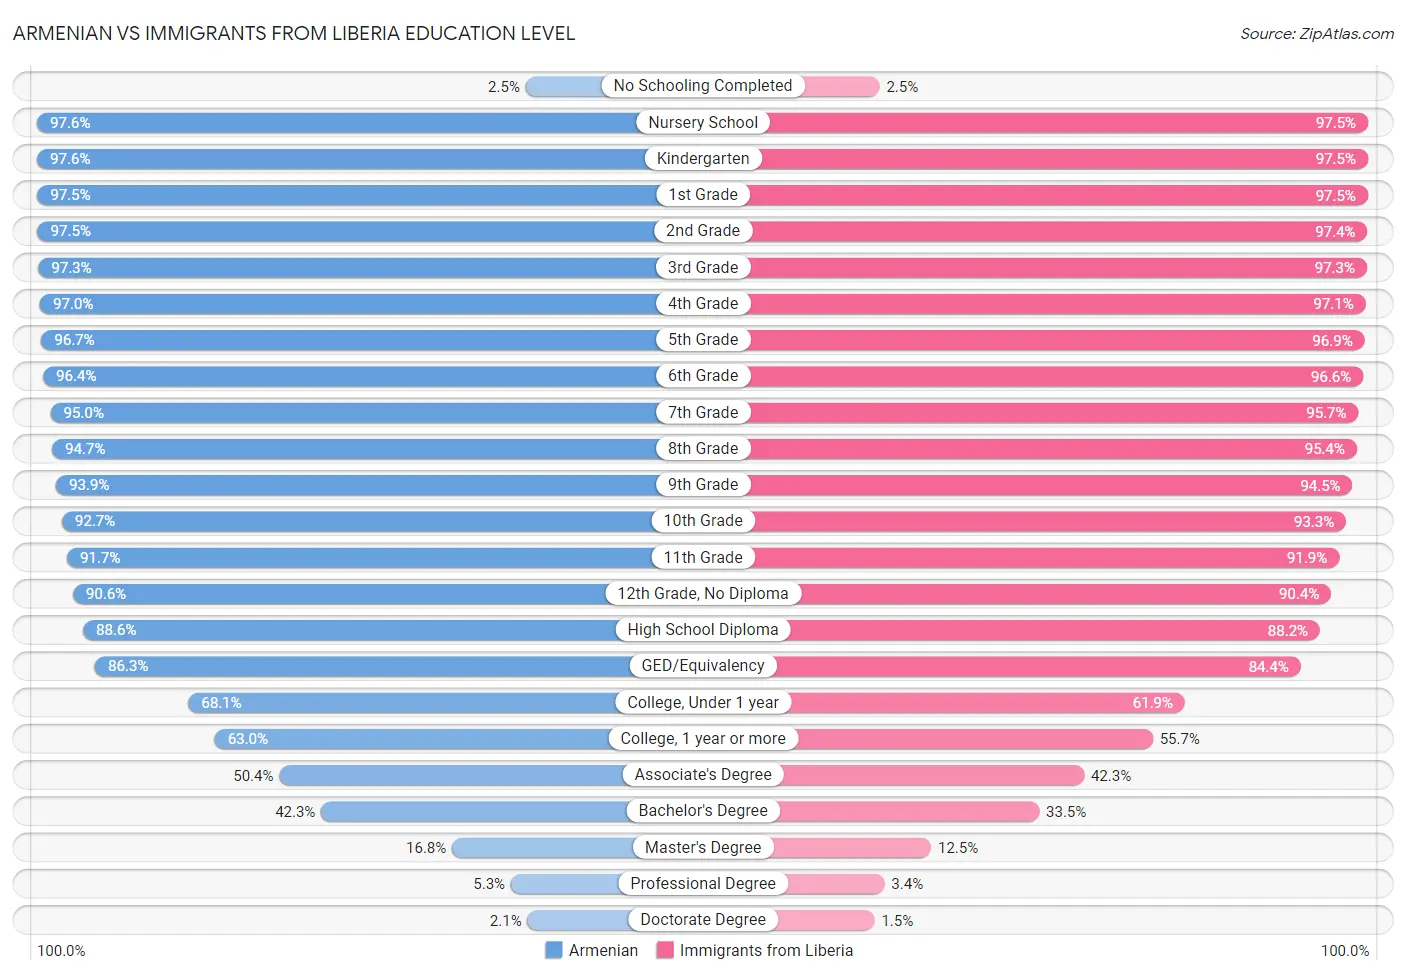 Armenian vs Immigrants from Liberia Education Level